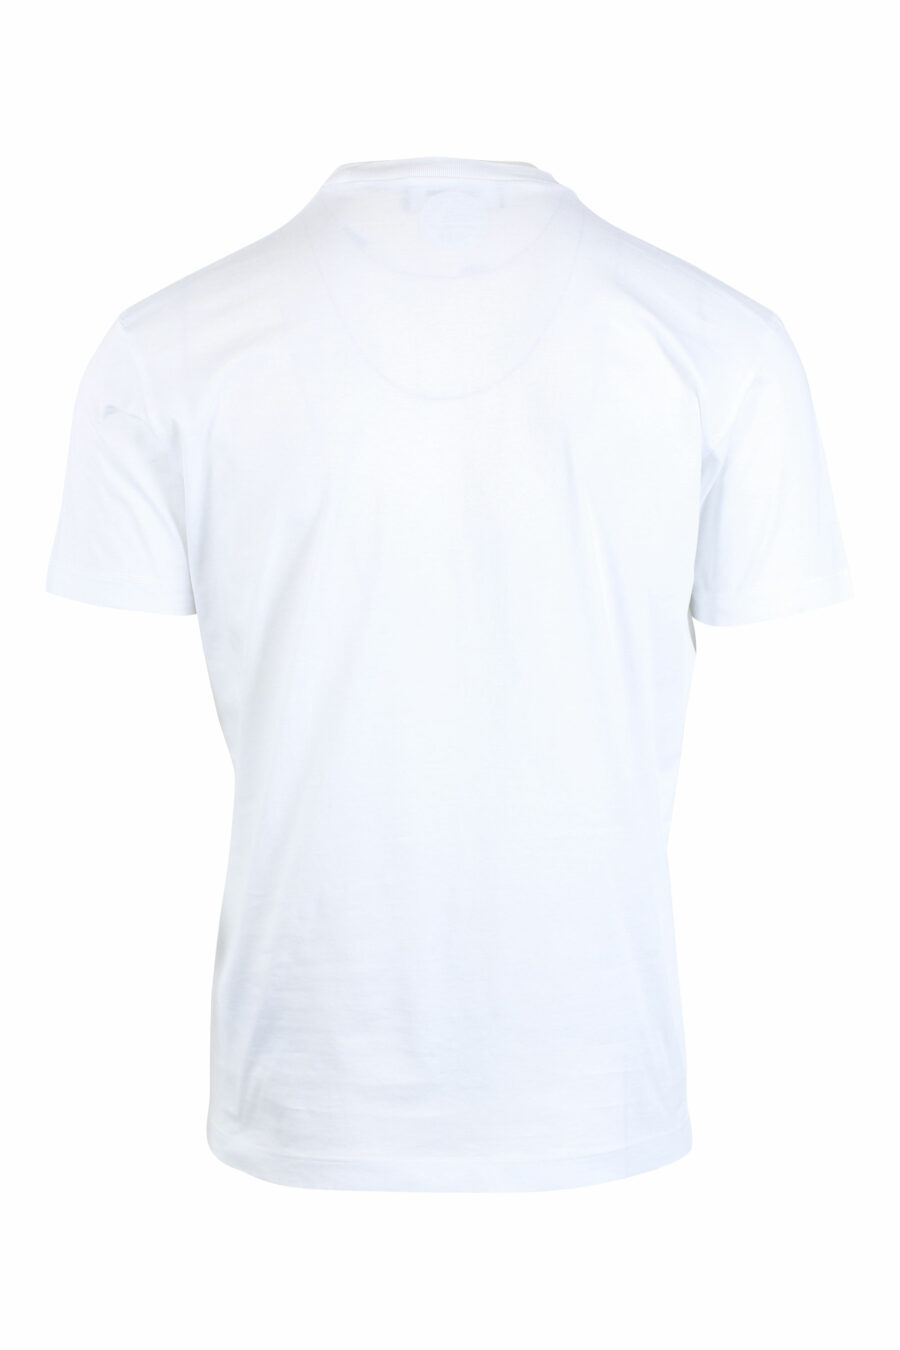 Camiseta blanca con maxilogo y hoja - IMG 2629